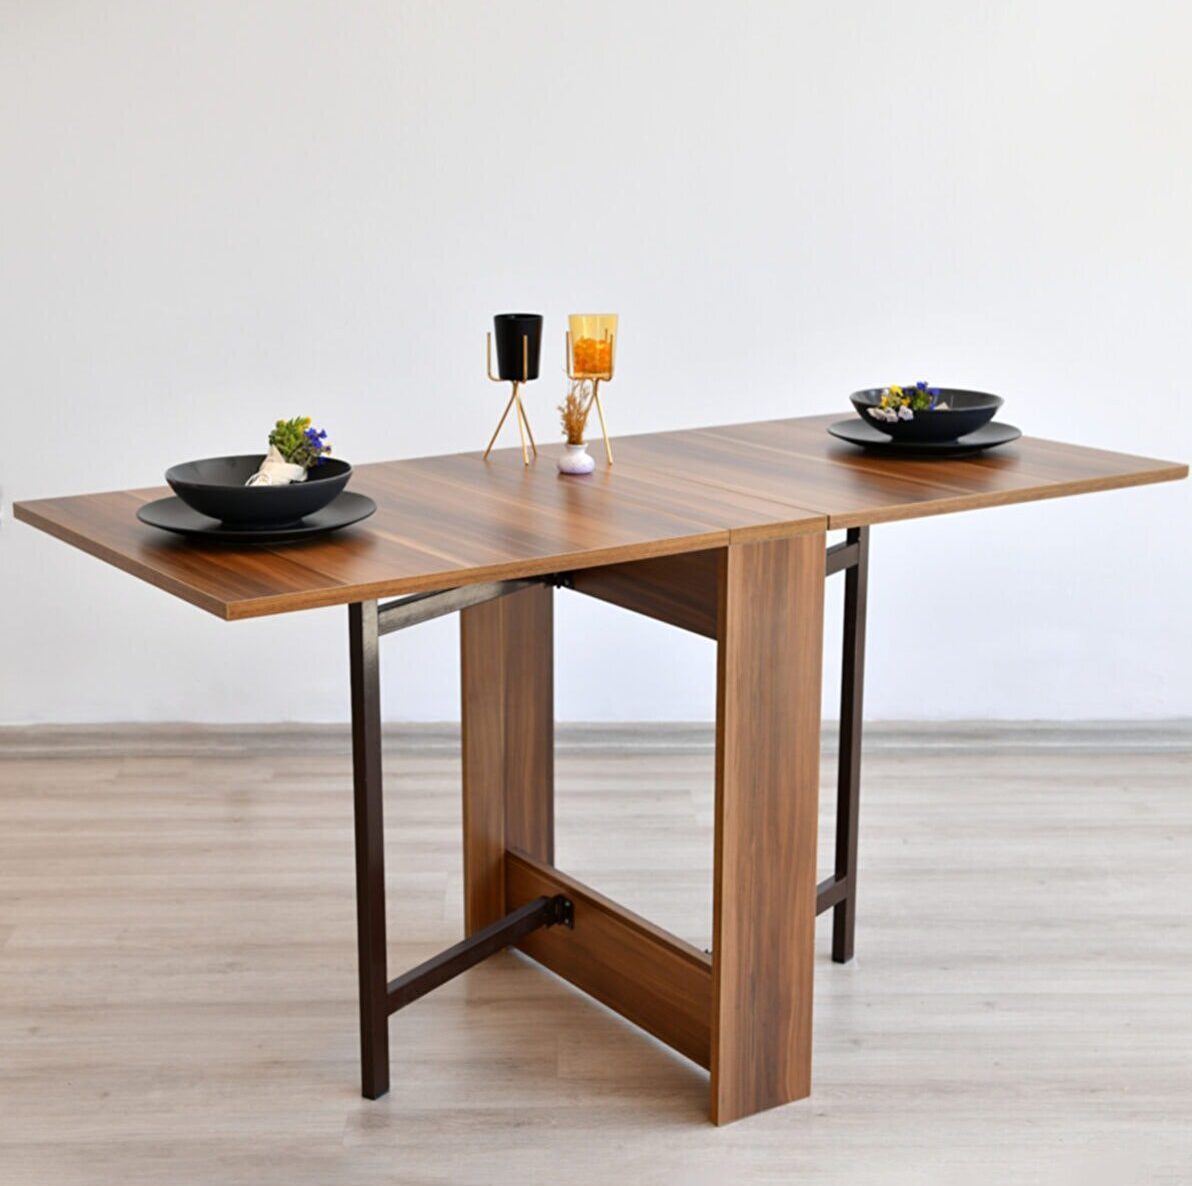 Walnut Folding Dining Table Foldable Portable Kitchen Desk 6 